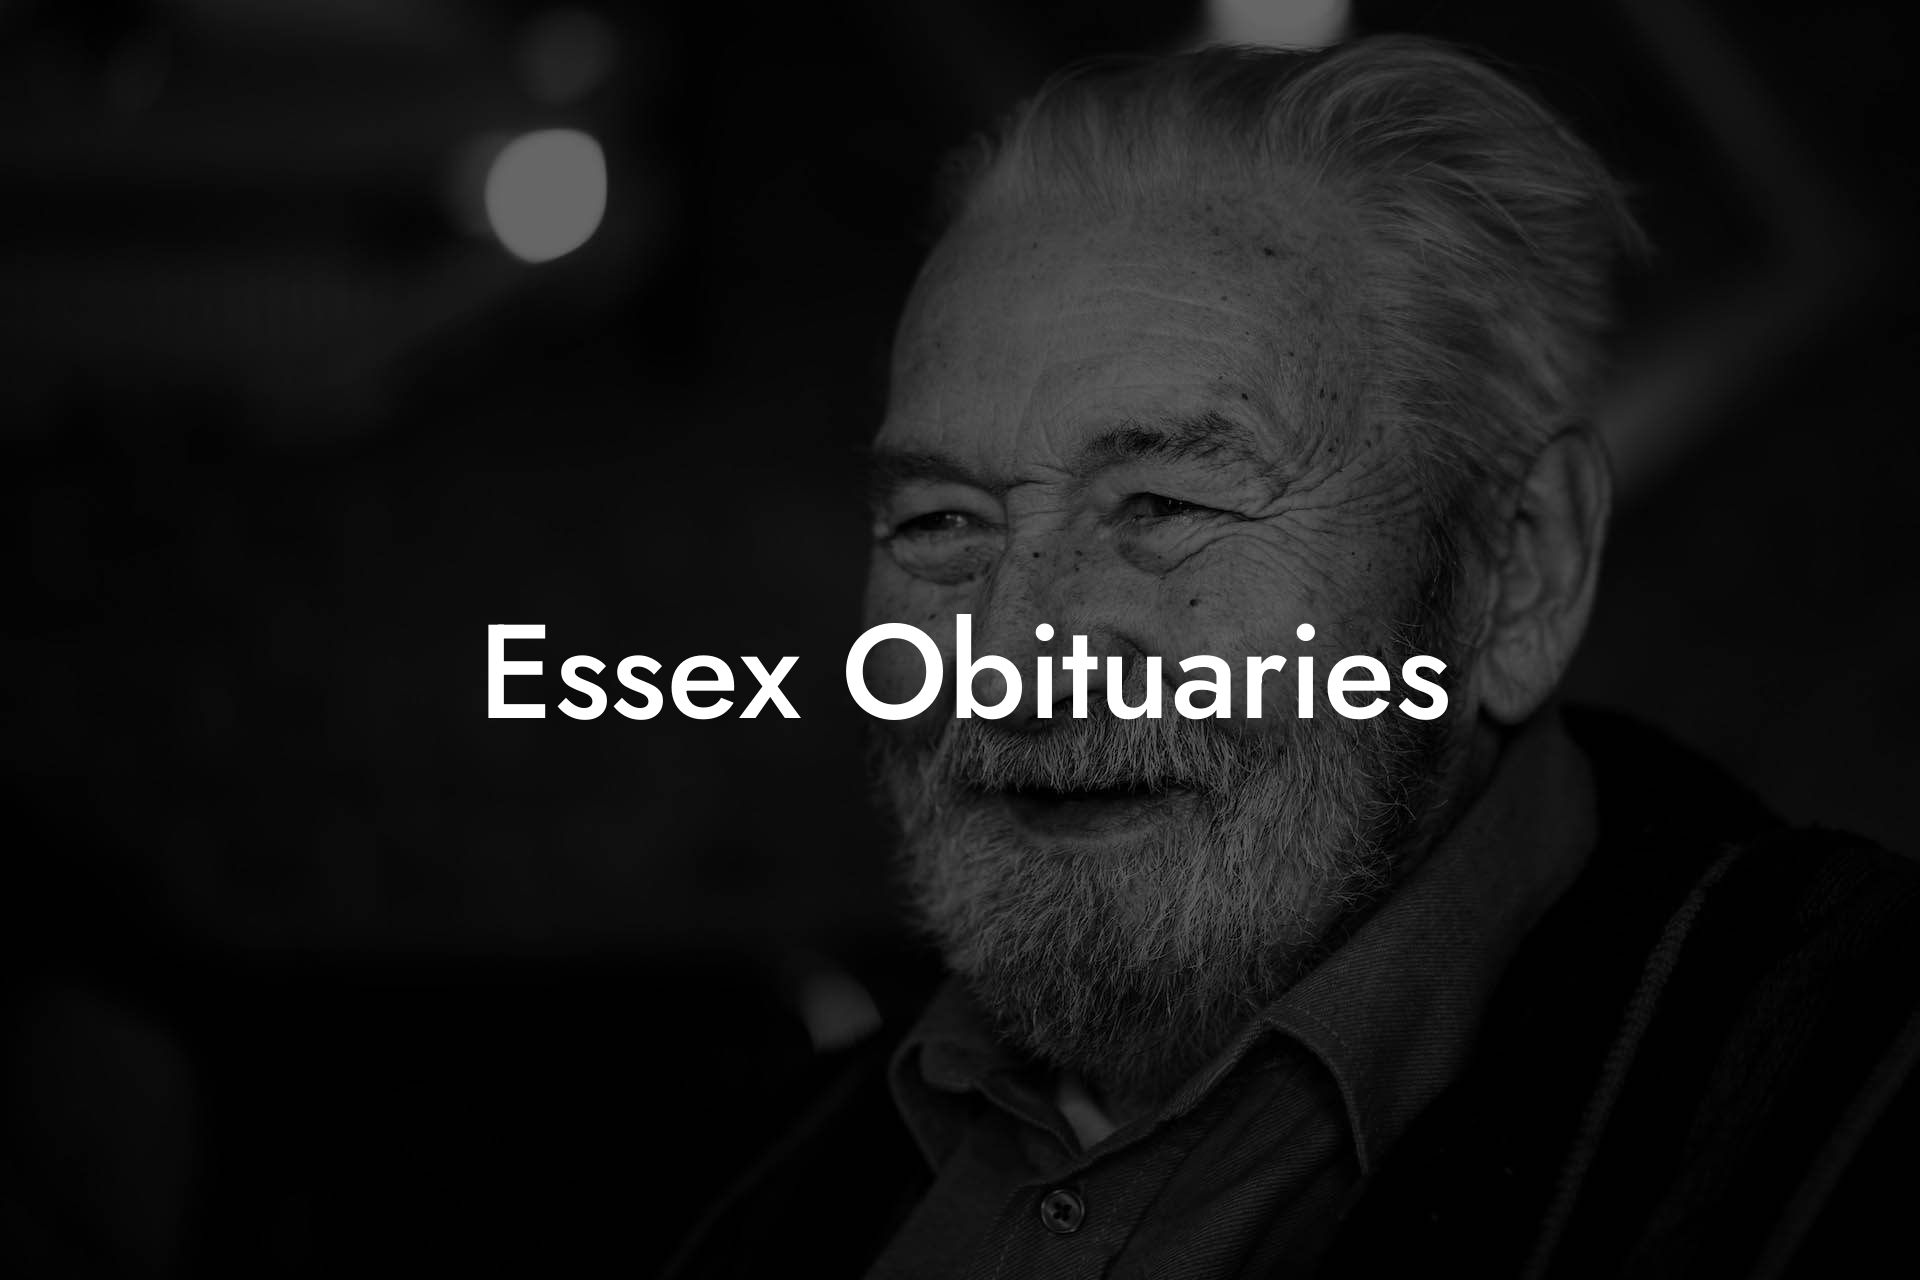 Essex Obituaries